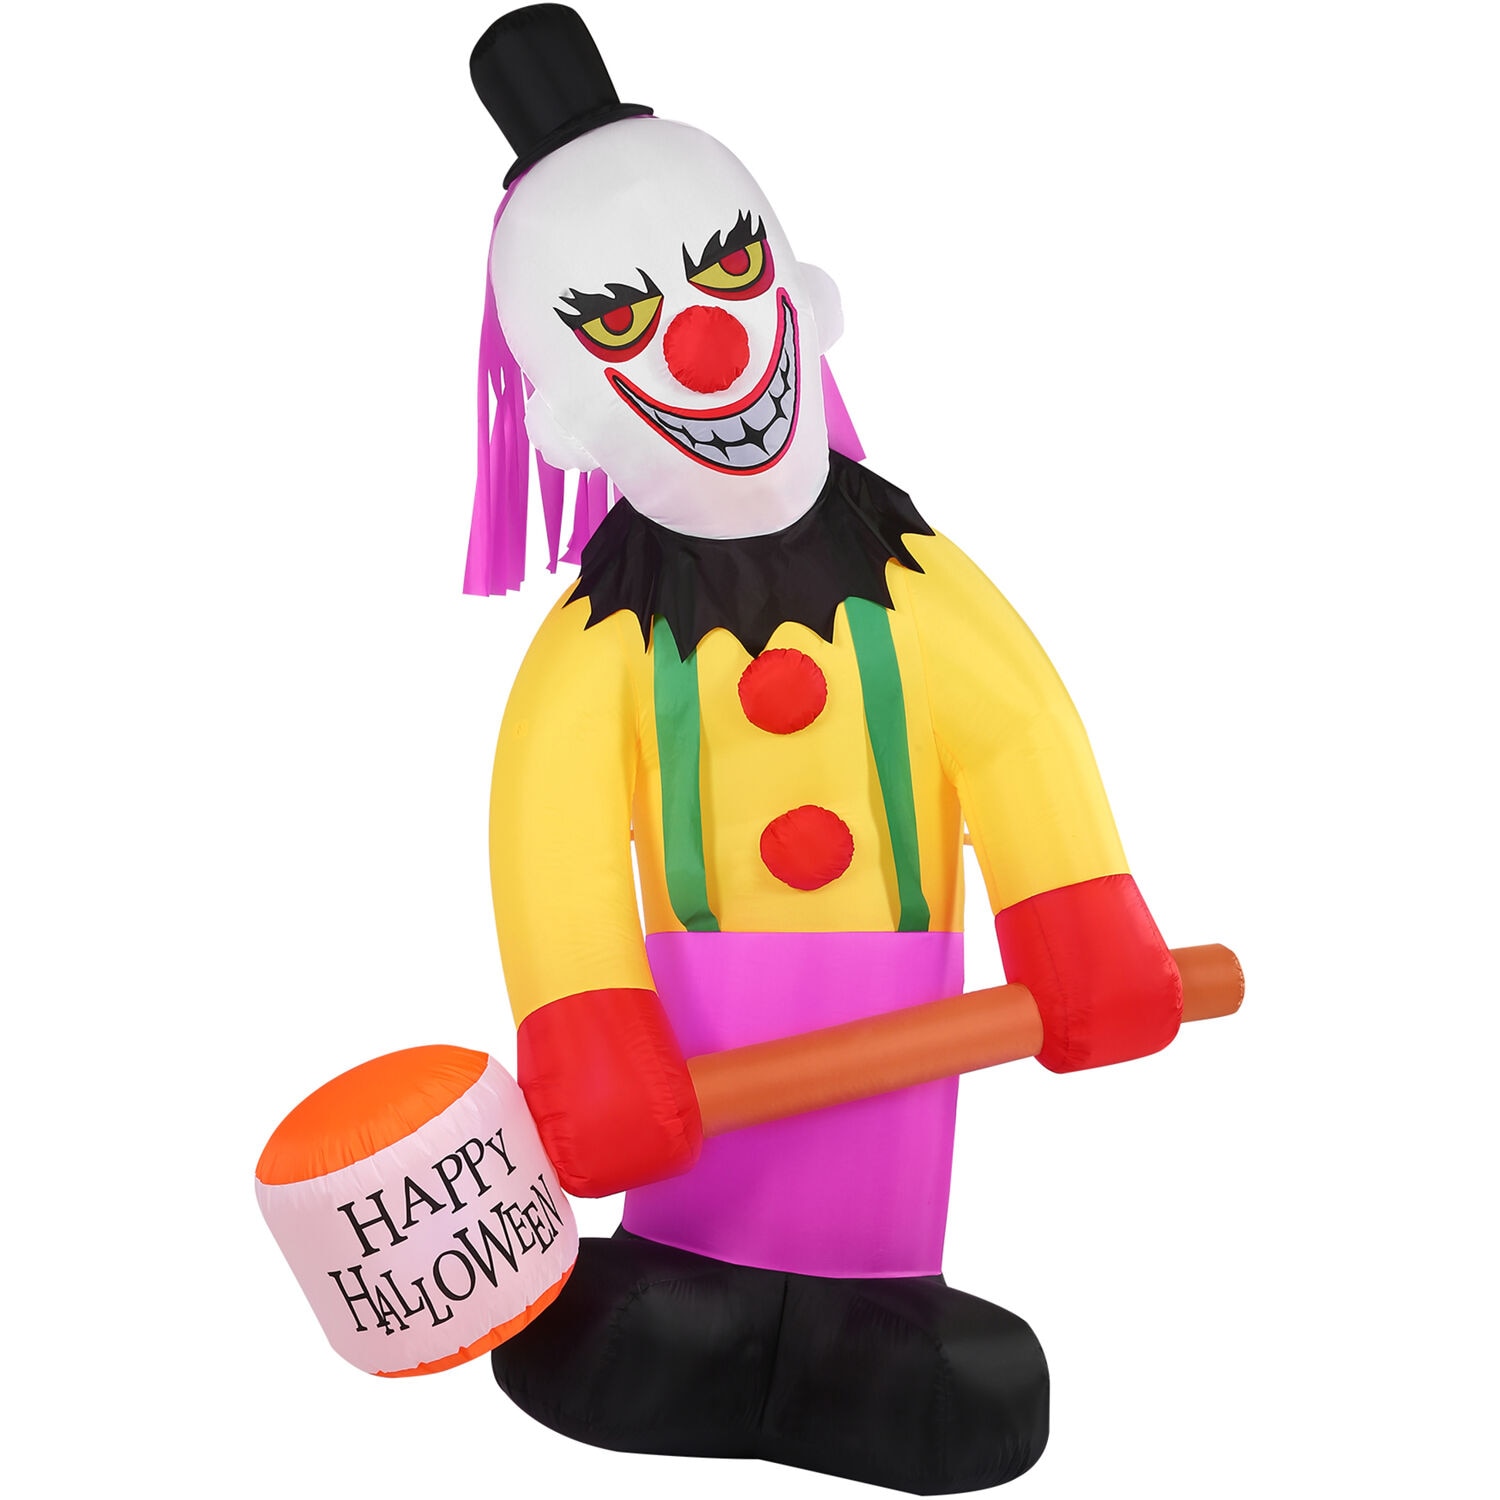 Fun & Games :: Kits :: Arts & Crafts Fun :: Balloon Knot Tying Tool /  Balloon Animals / Clown Tools